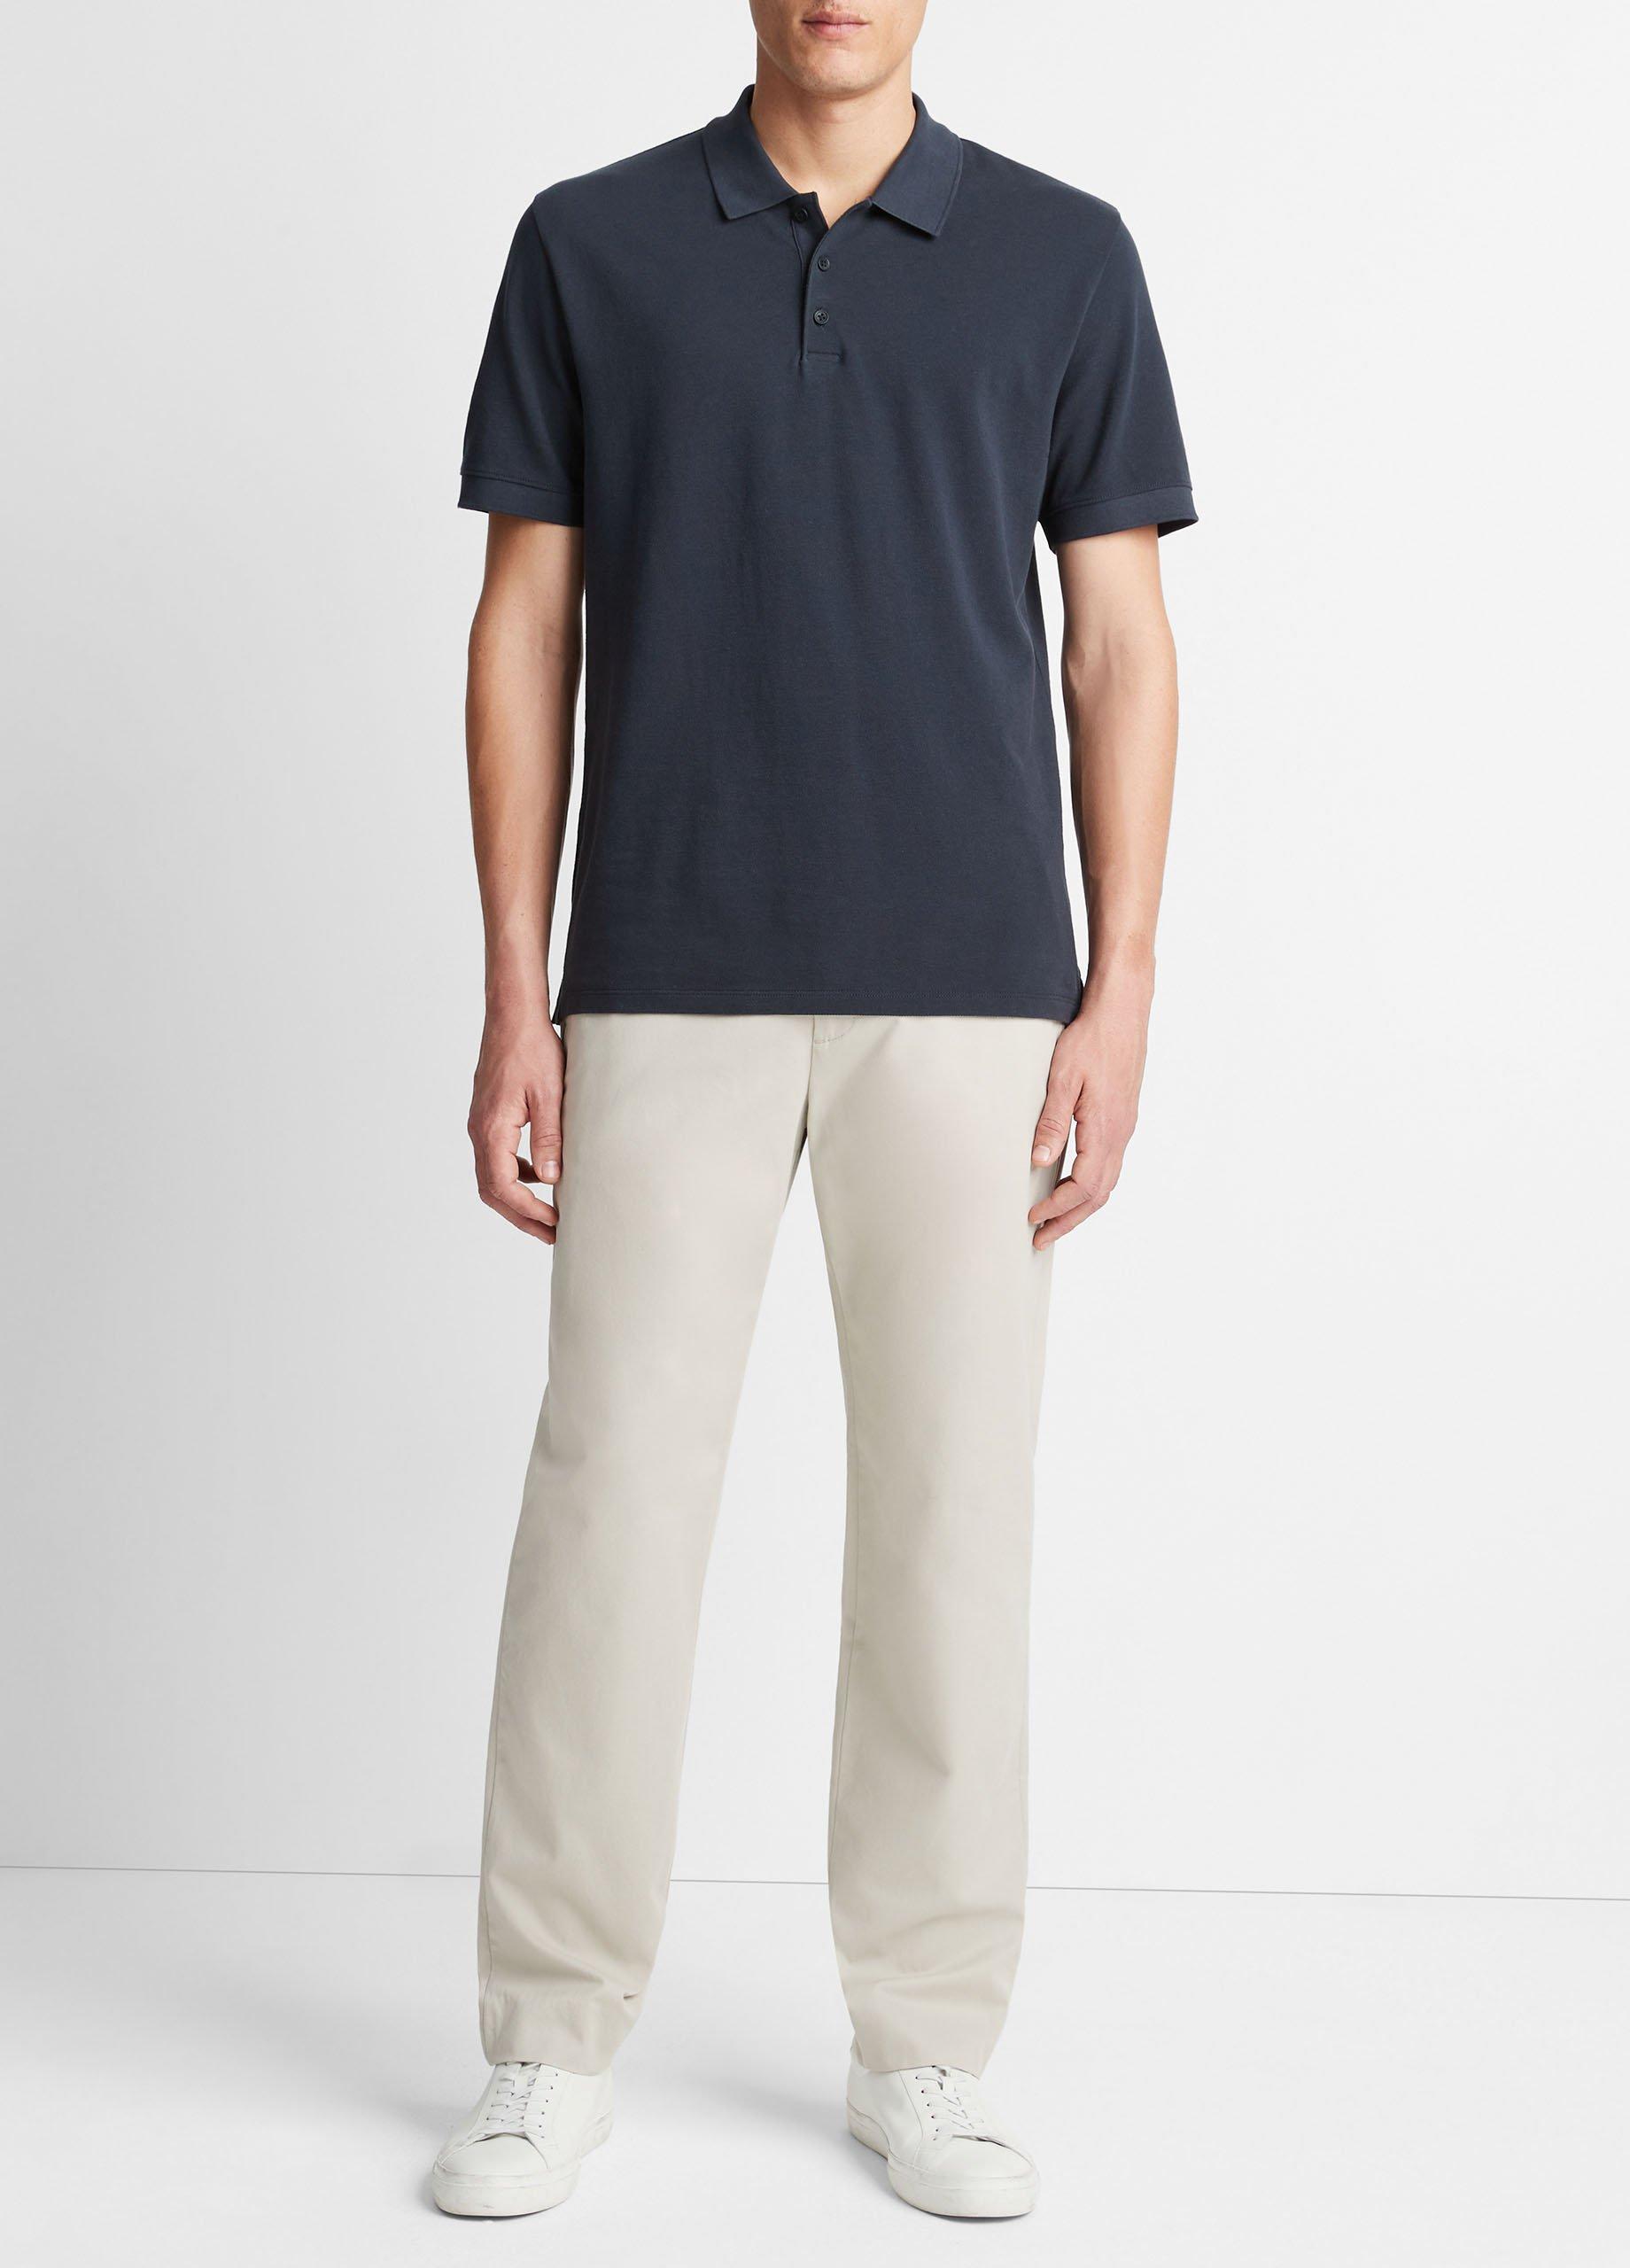 Cotton Piqué Polo Shirt, Coastal Blue, Size XL Vince